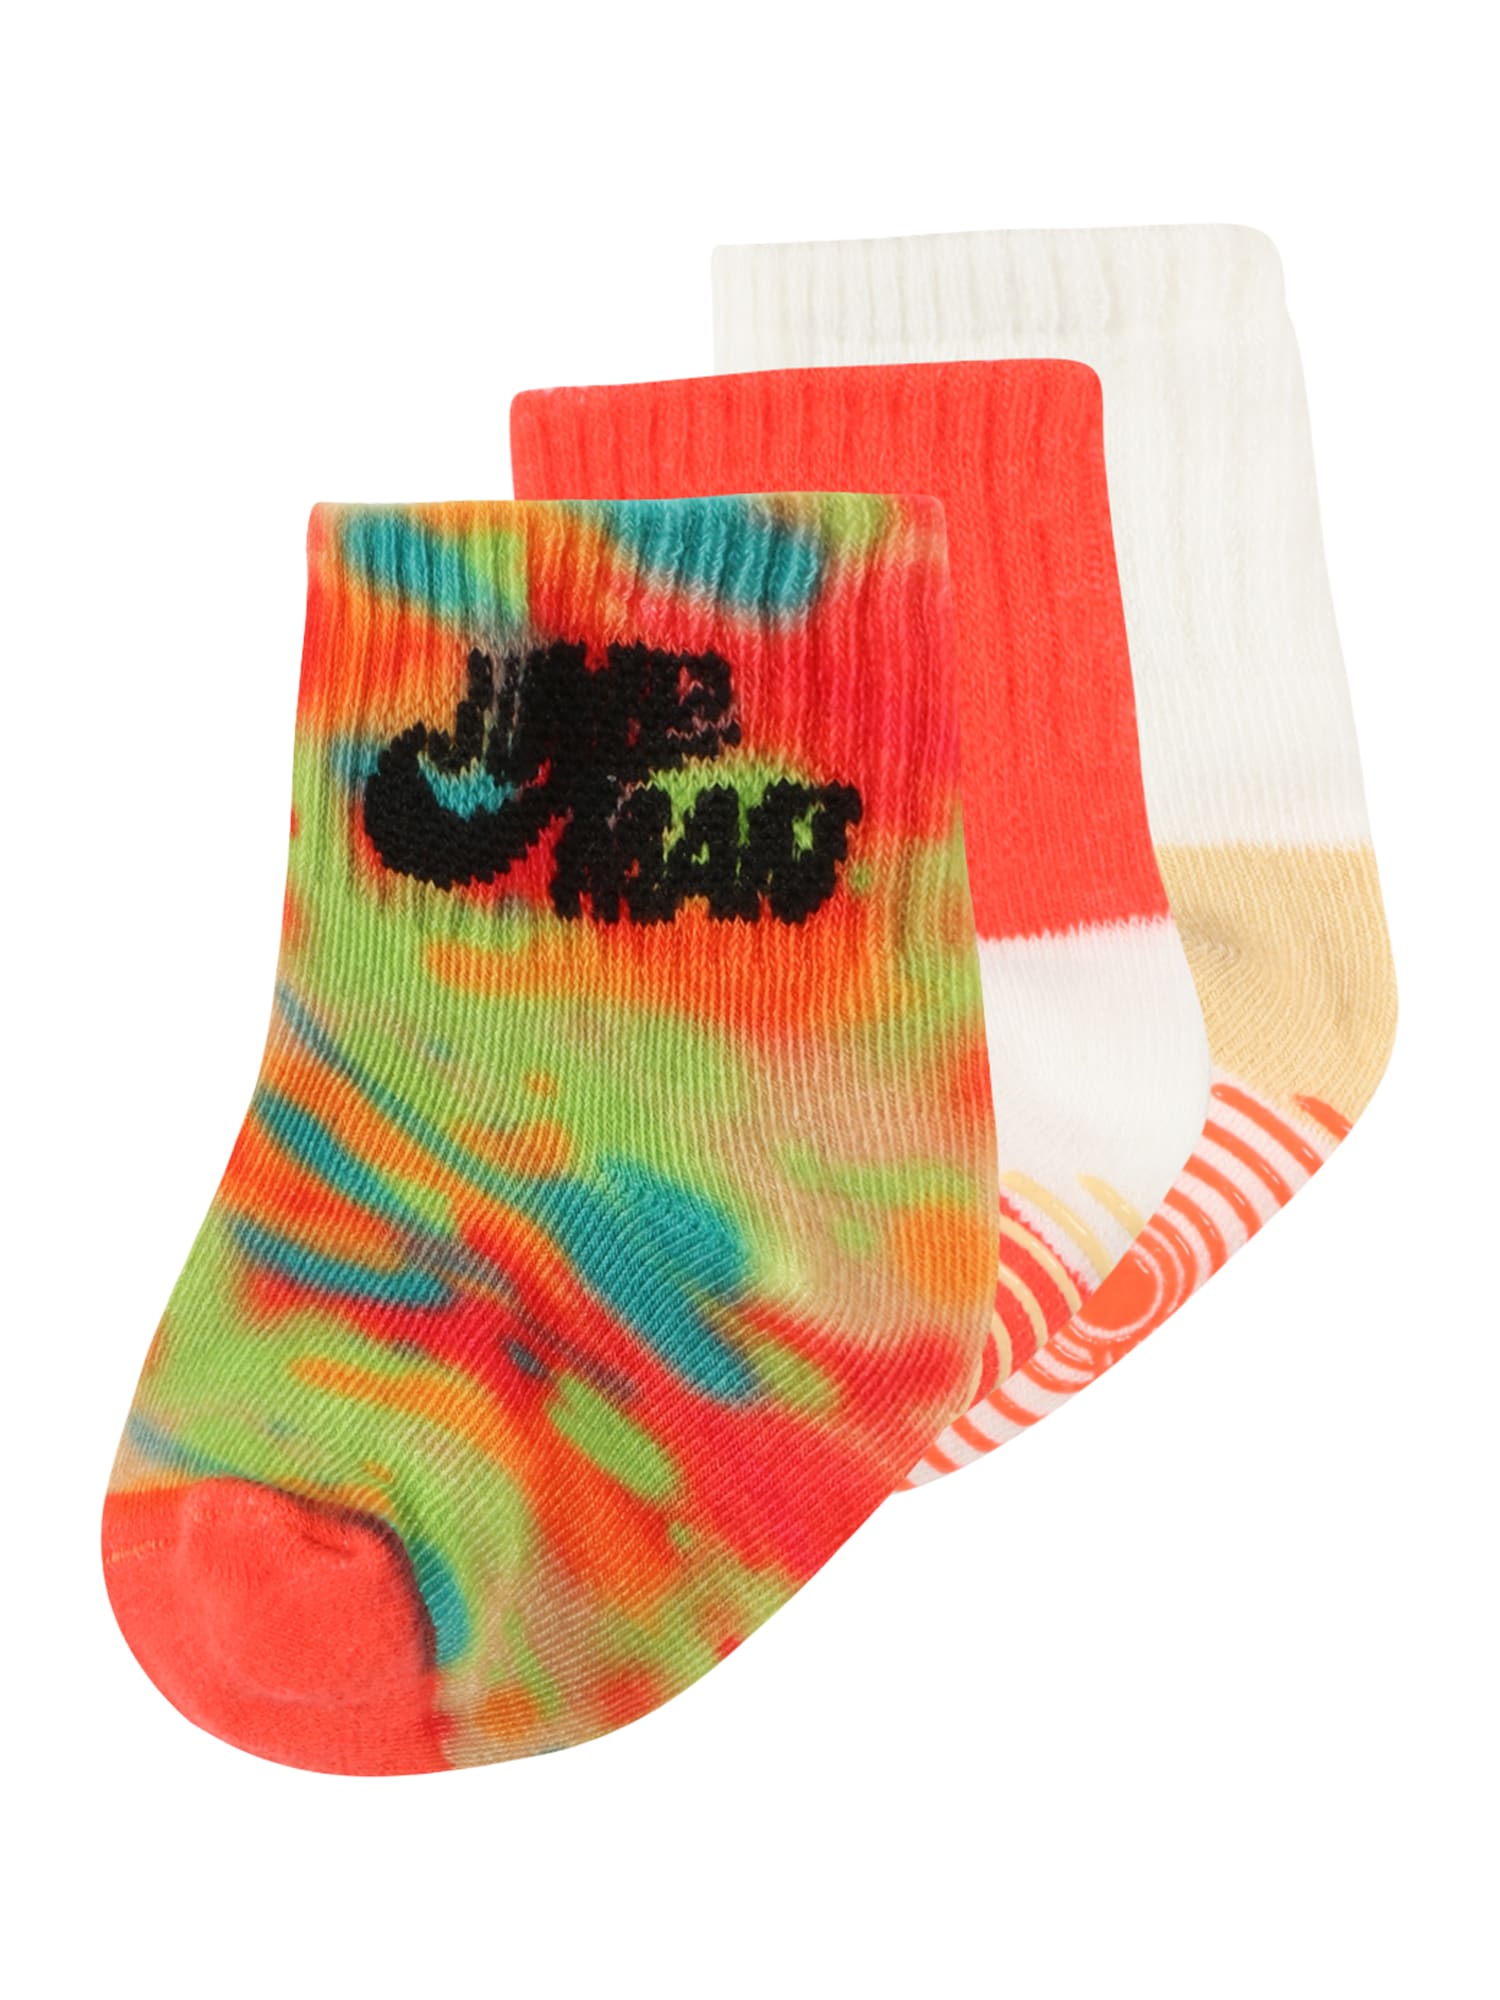 Socken von Jordan